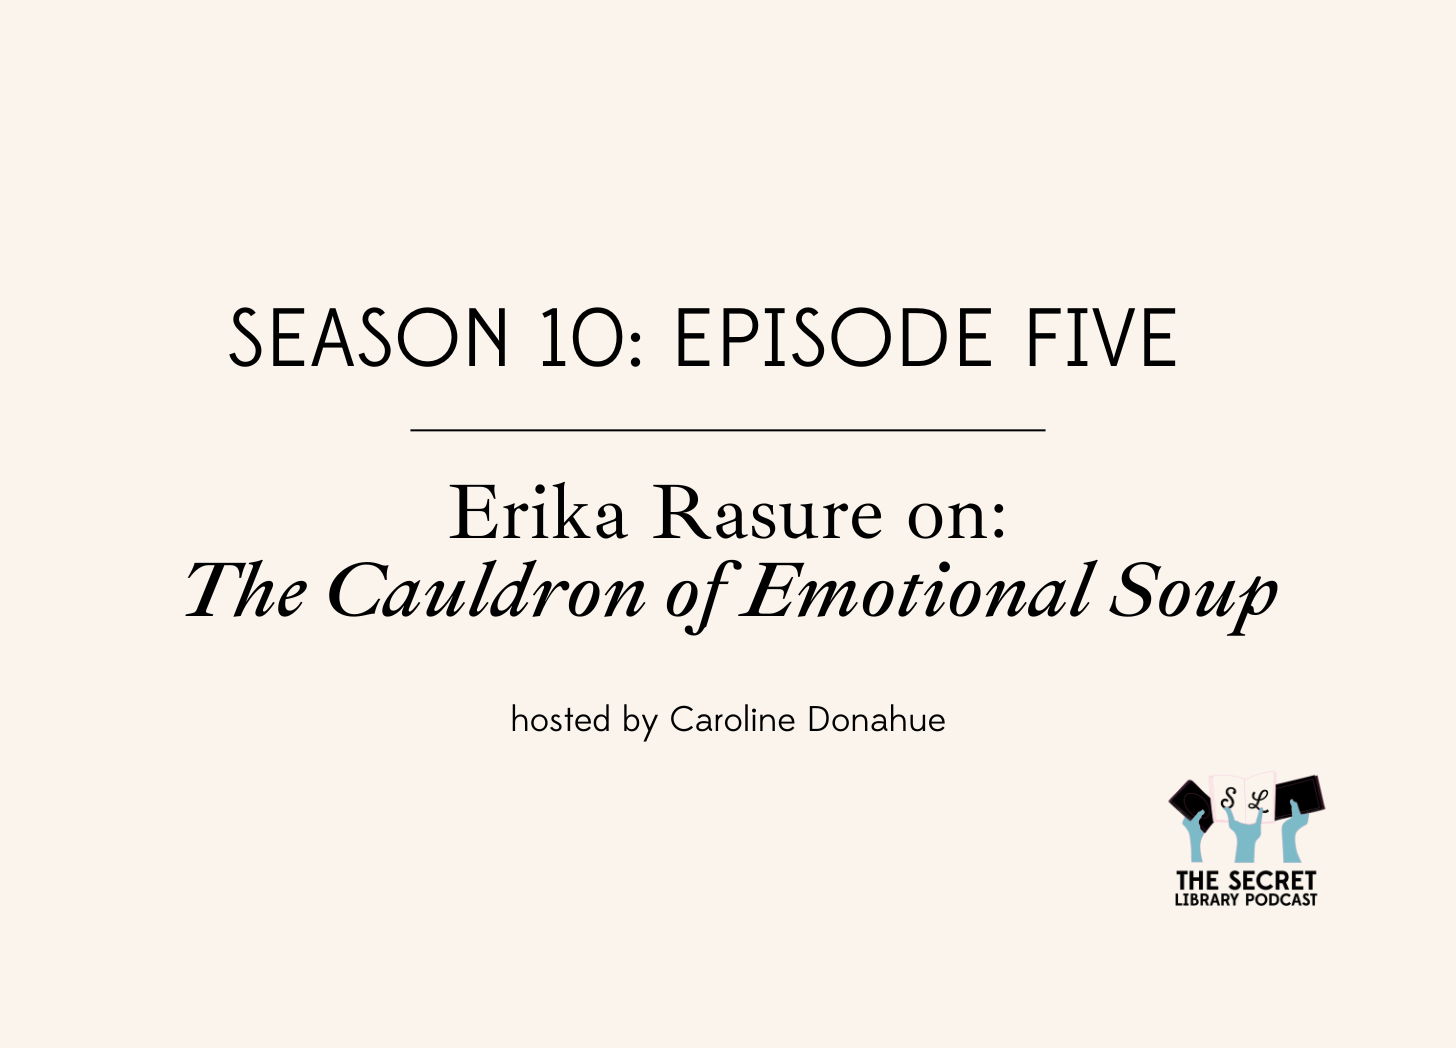 The Cauldron of Emotional Soup with Erika Rasure